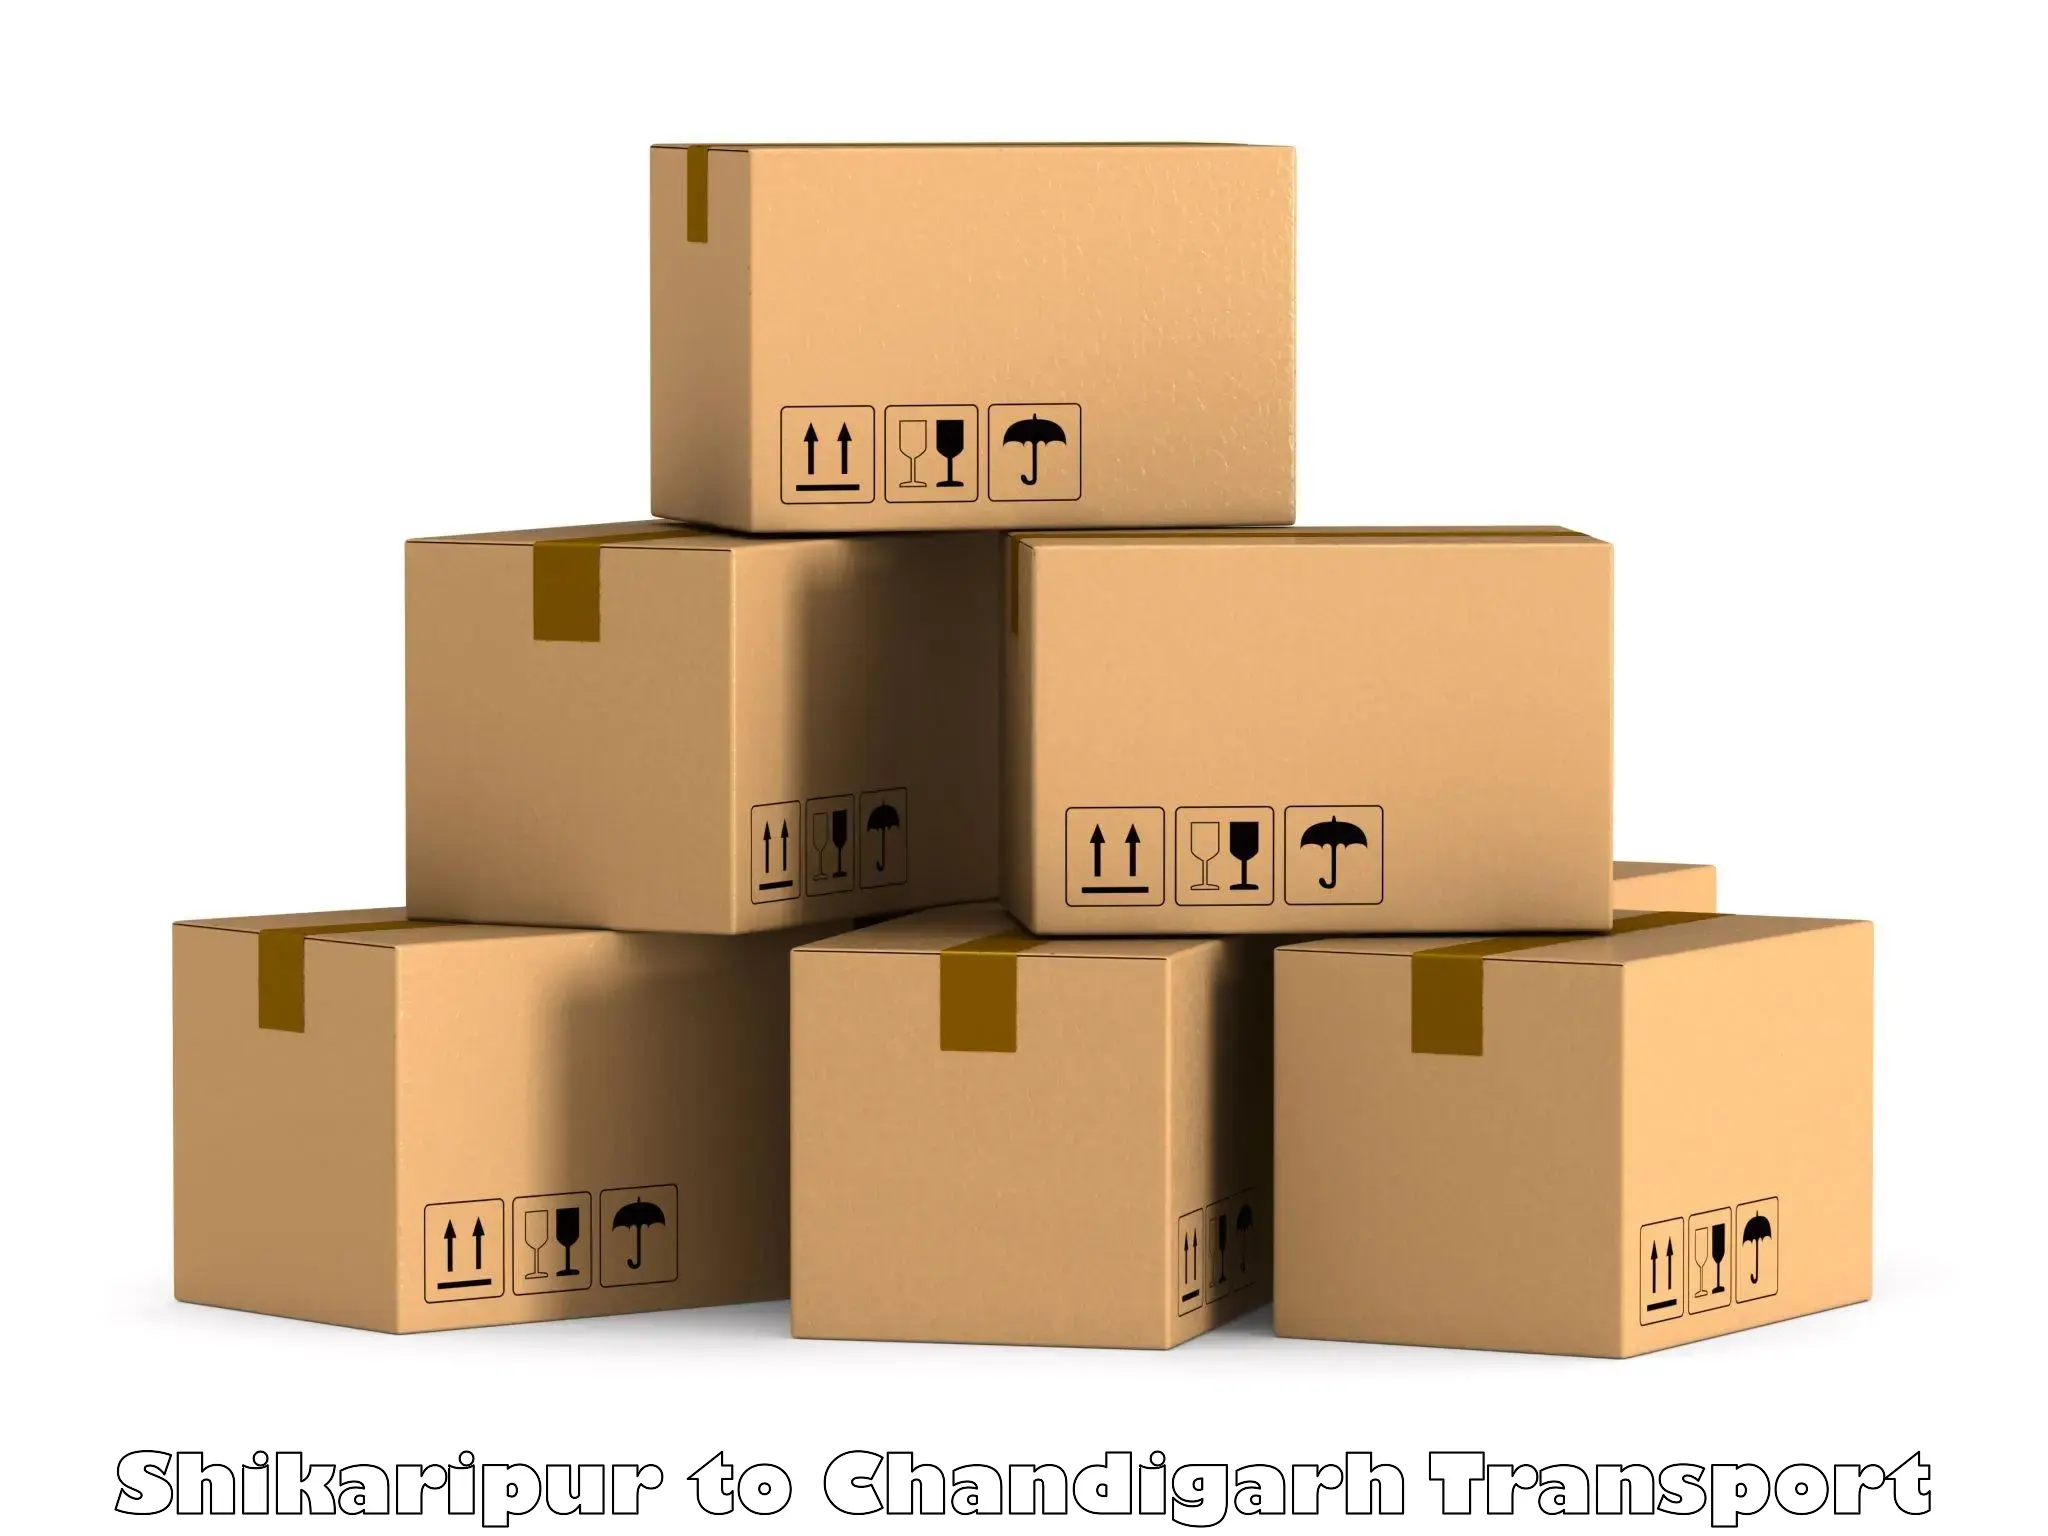 Vehicle parcel service Shikaripur to Chandigarh